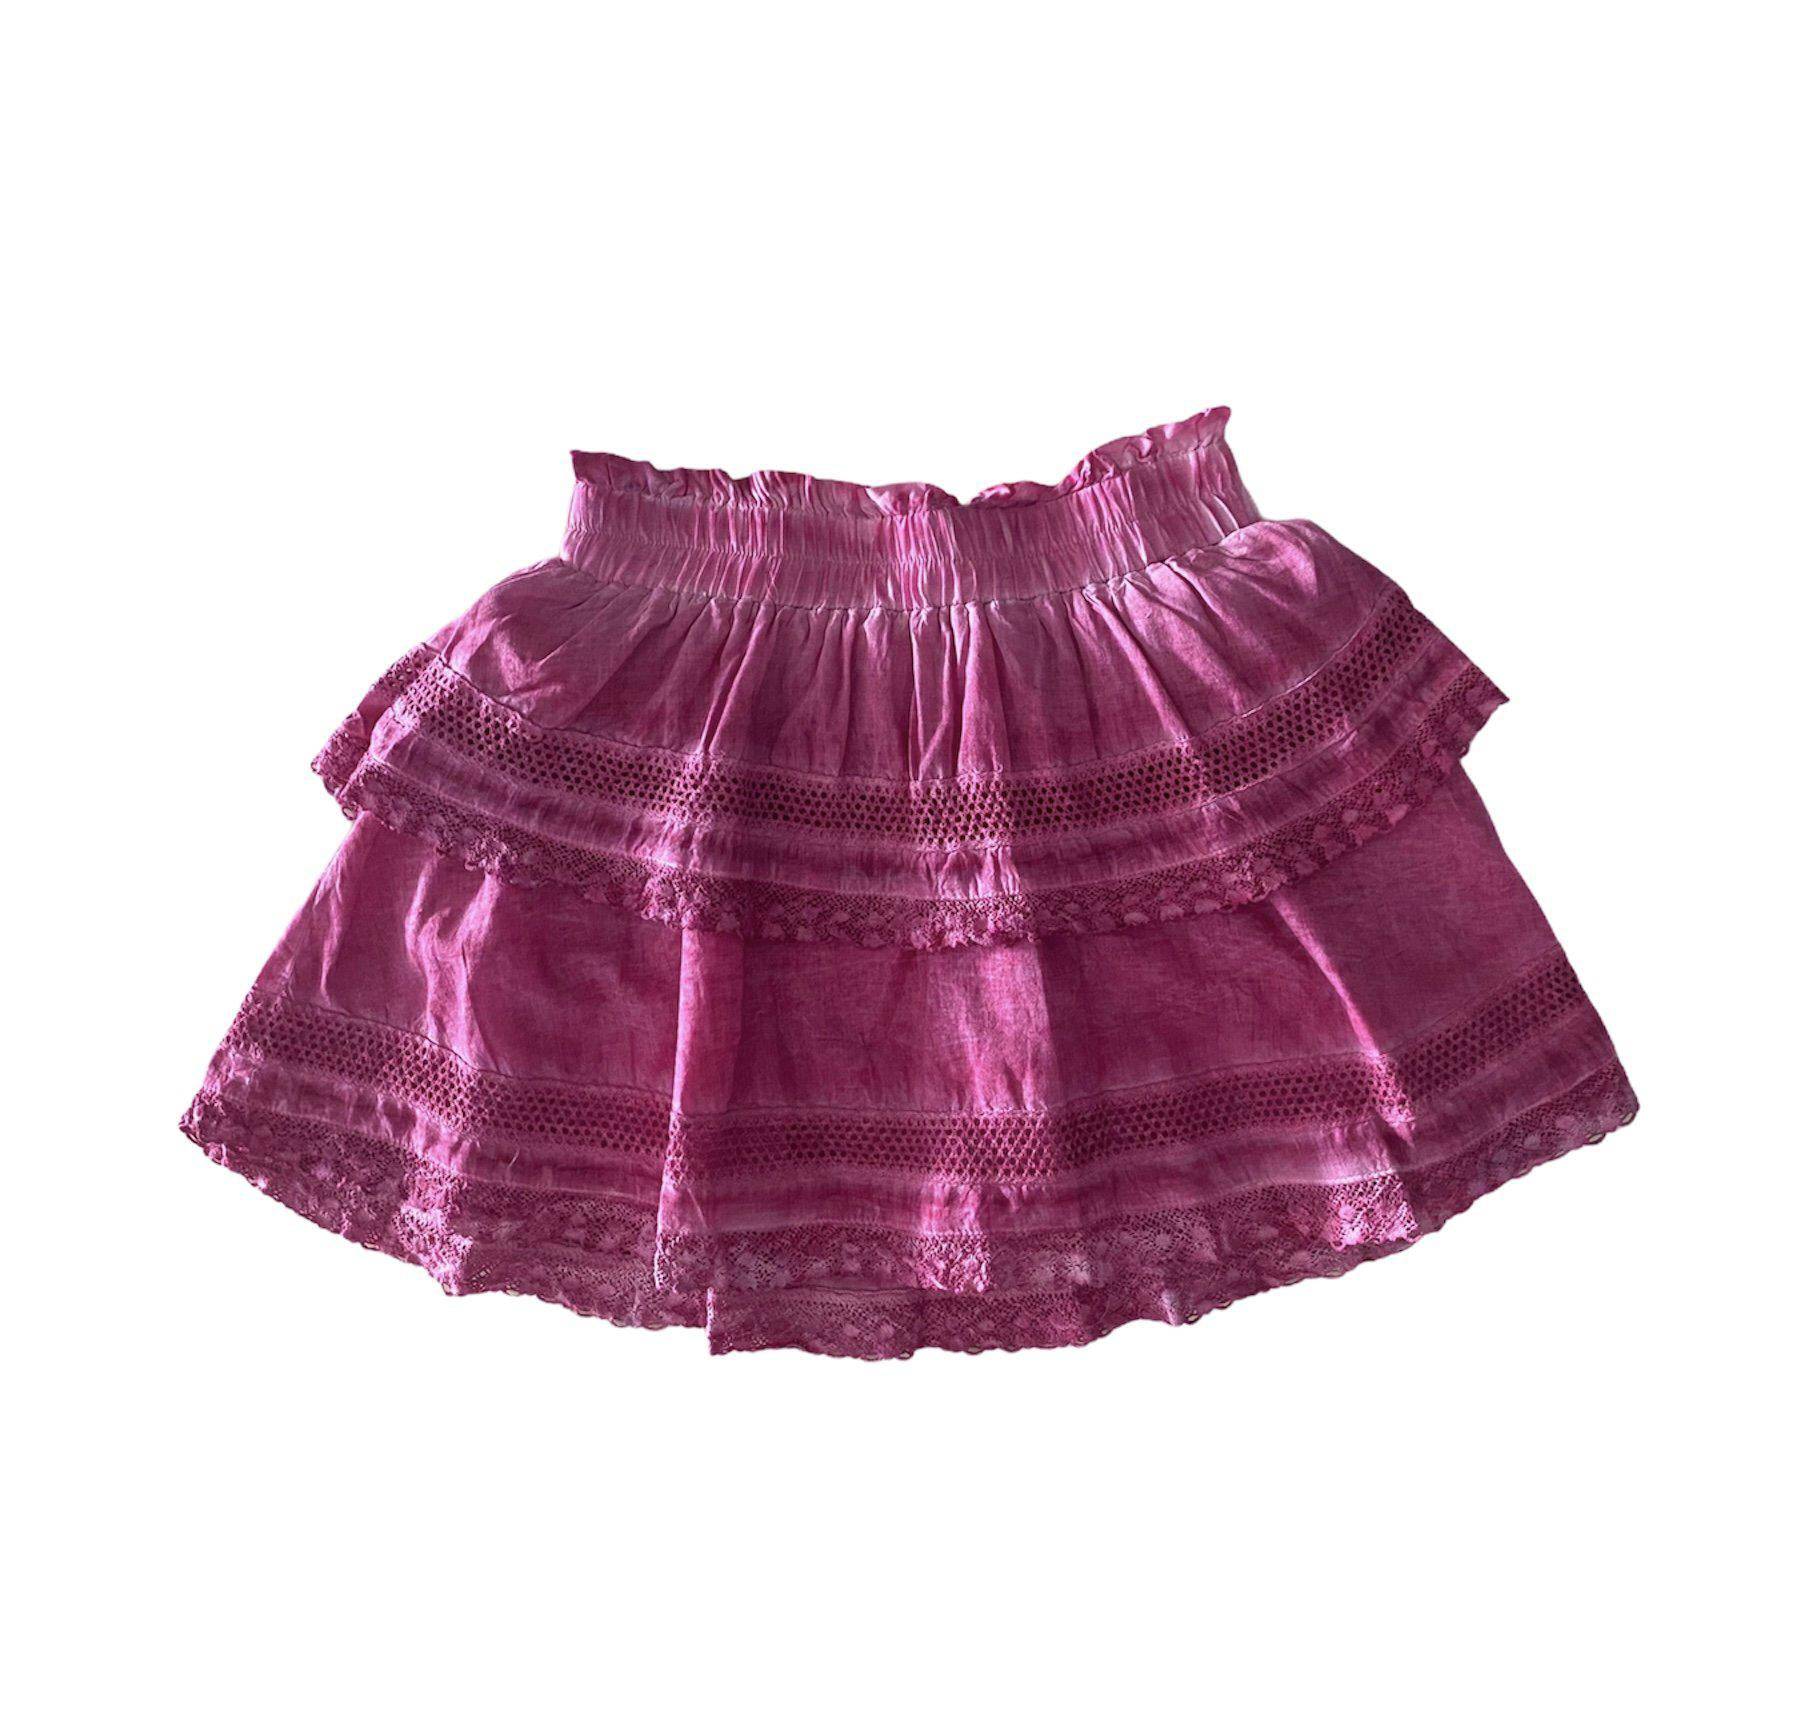 Hot Pink Stone Wash Skirt - Twinkle Twinkle Little One